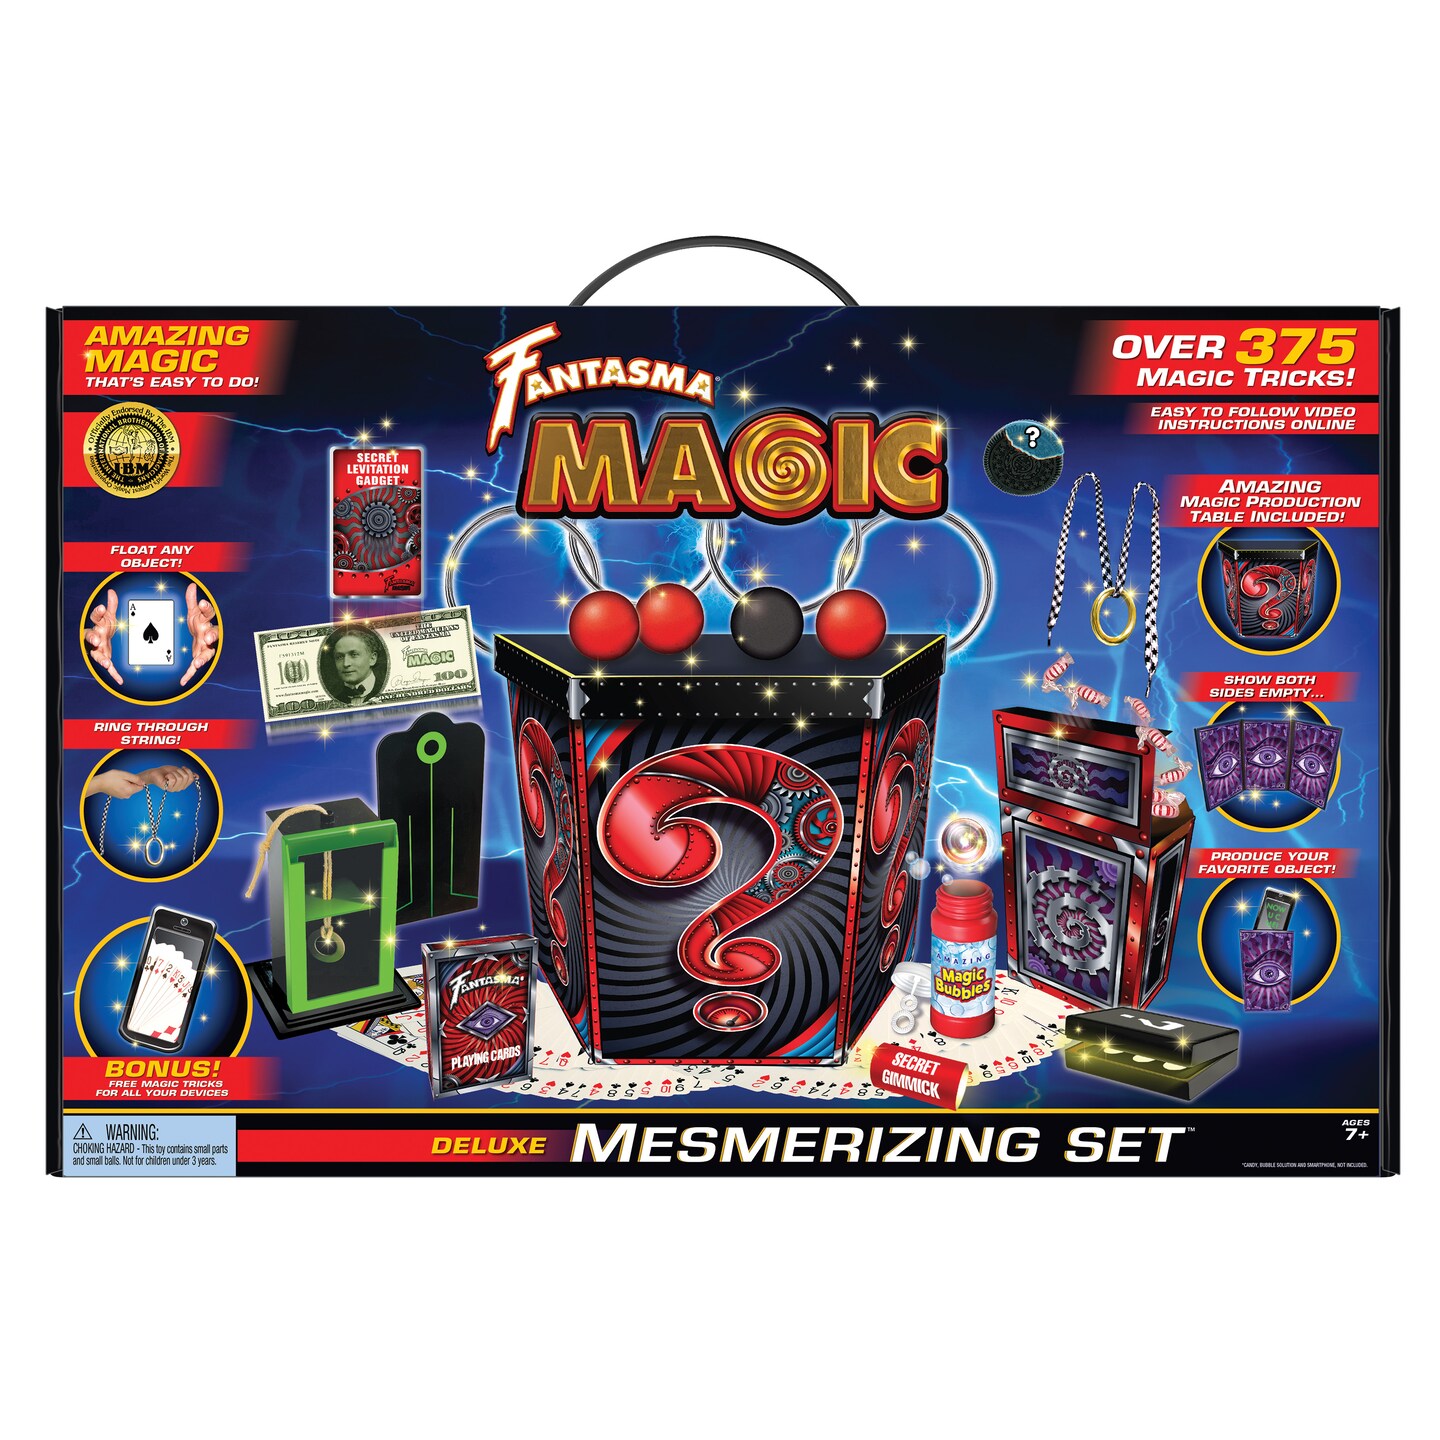 Deluxe Mesmerizing Magic Set By Fantasma Magic Tricks And Sets Michaels